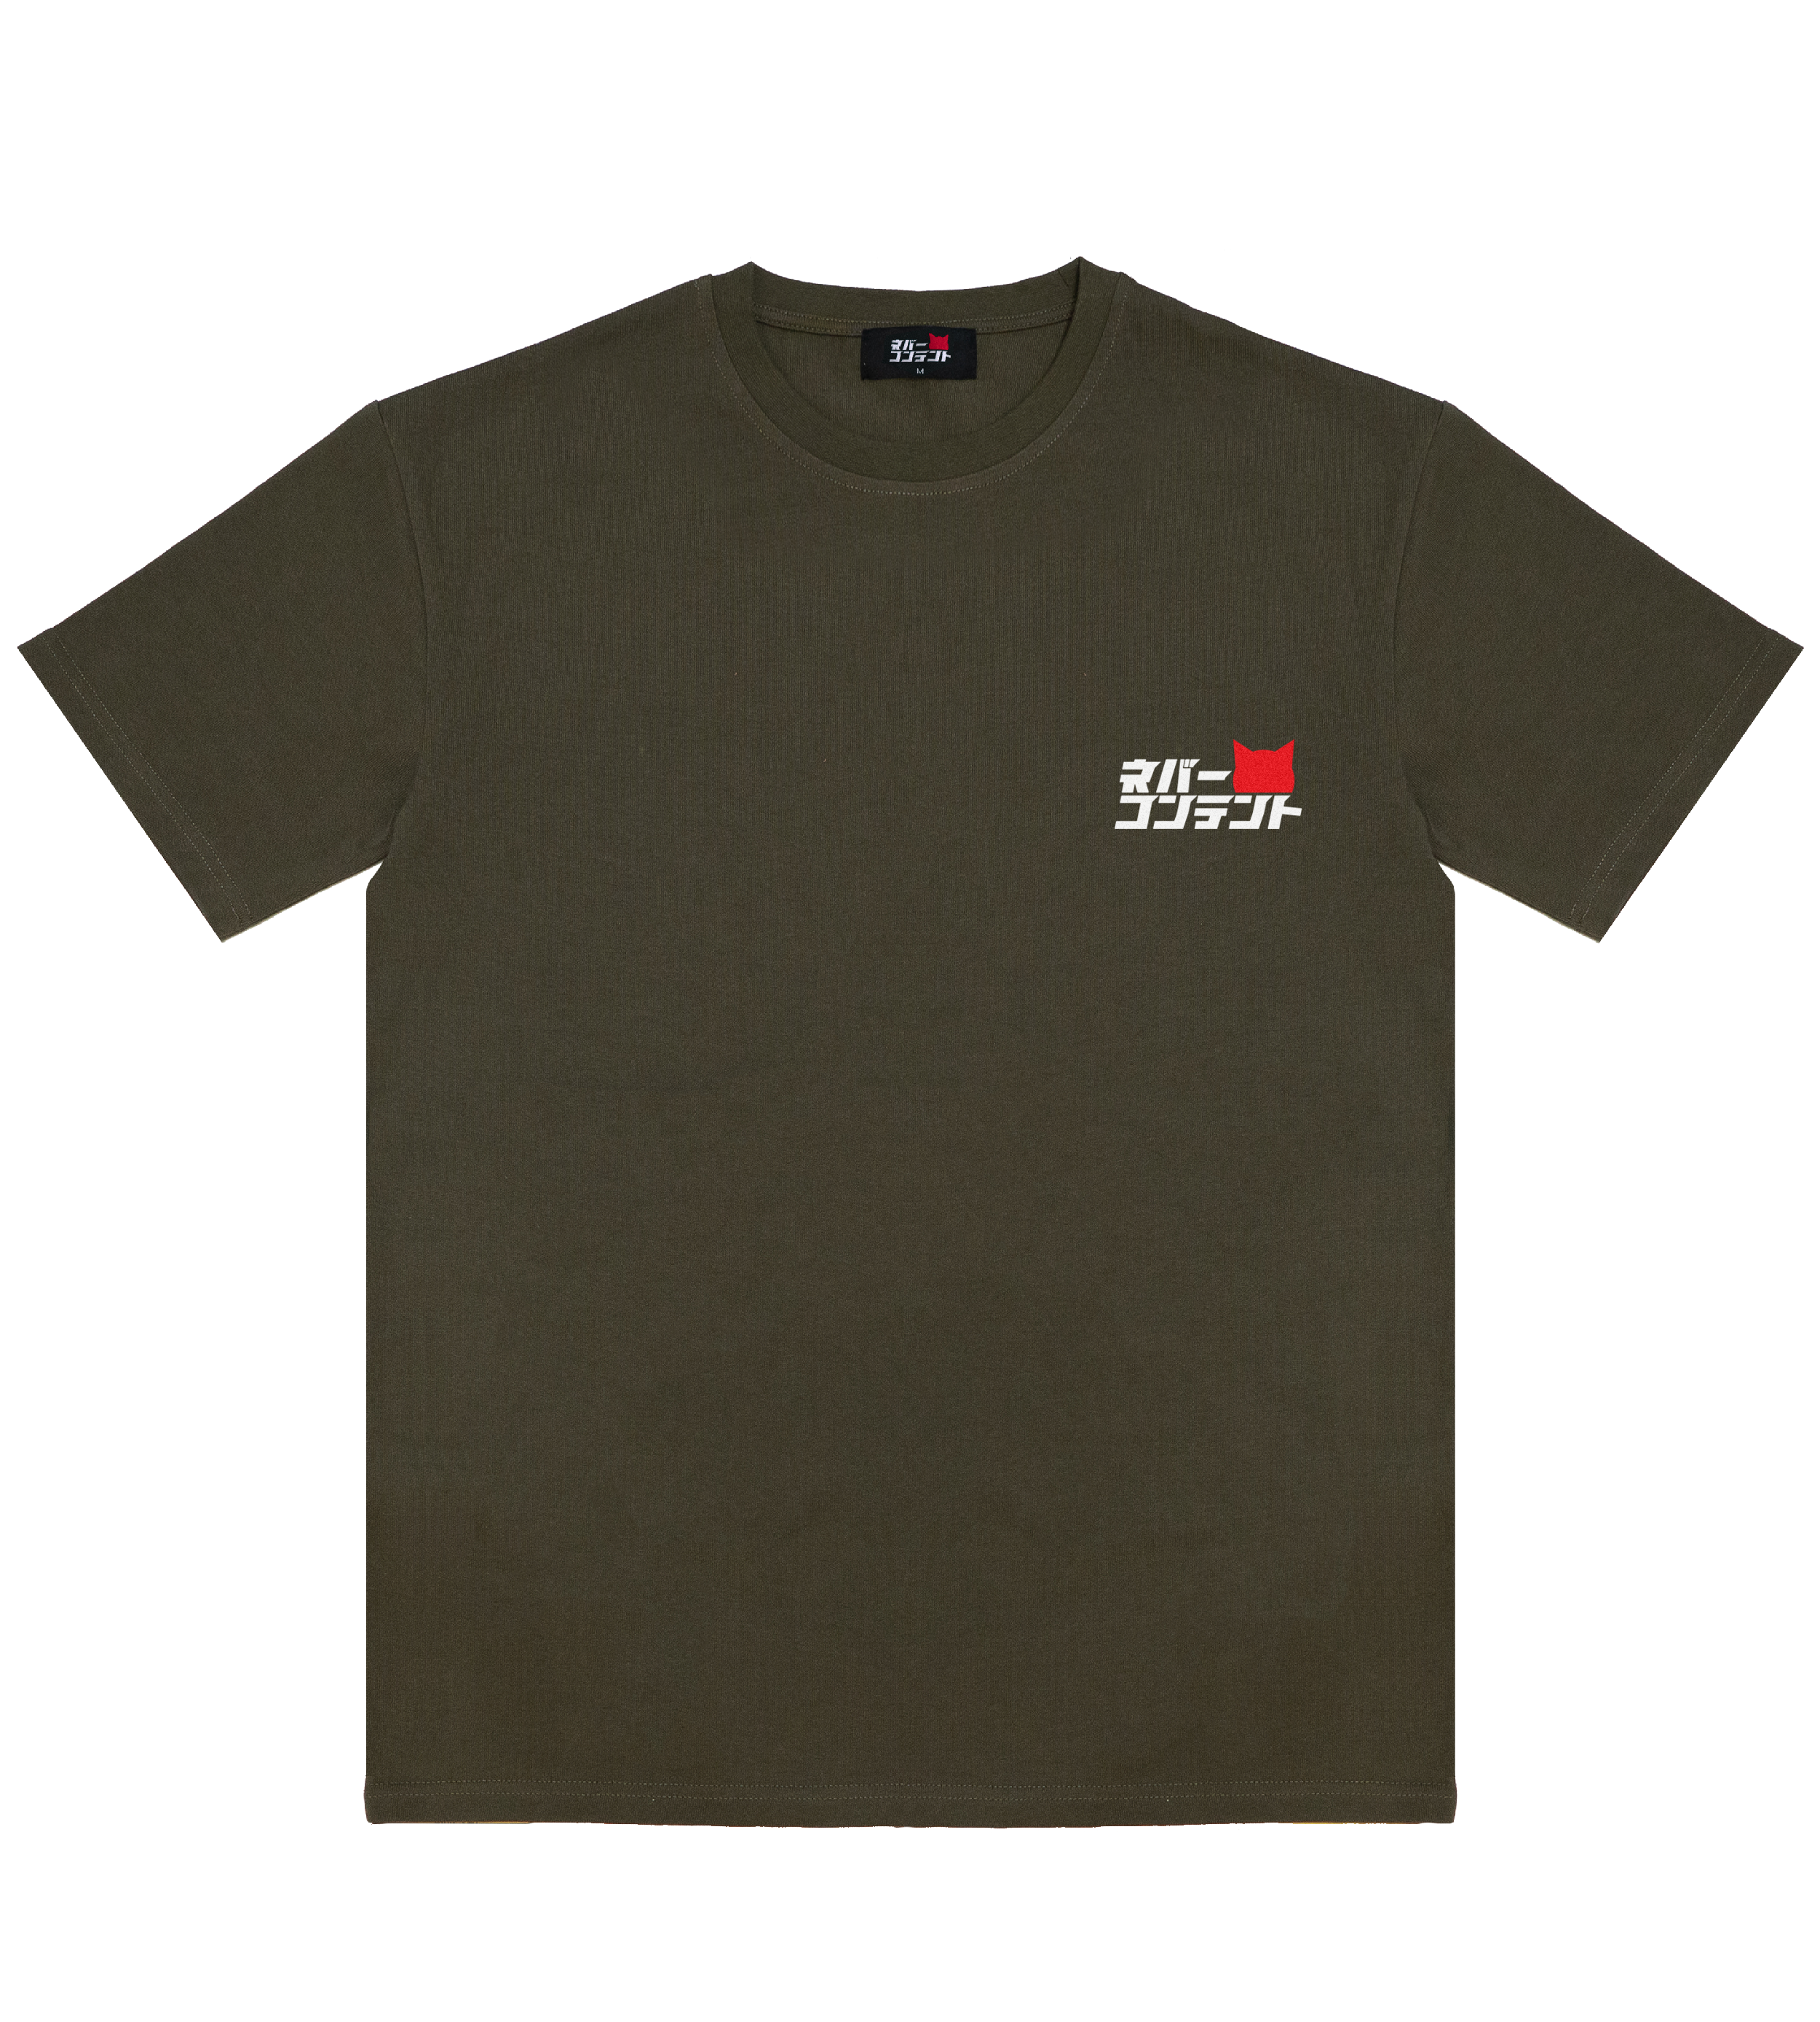 CSB - Olive Shirt